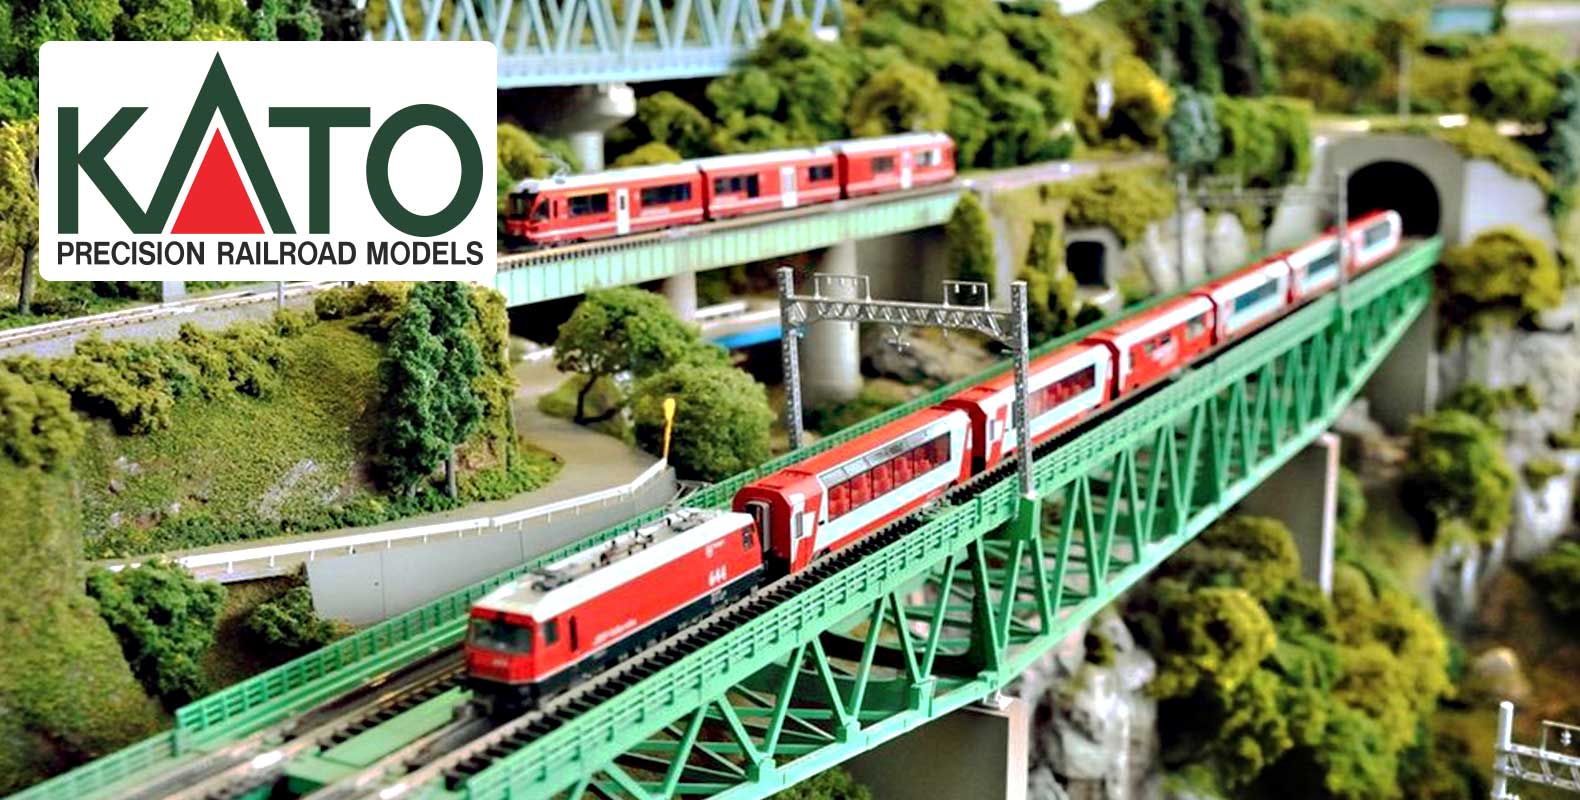 Kato Model Train Scenery